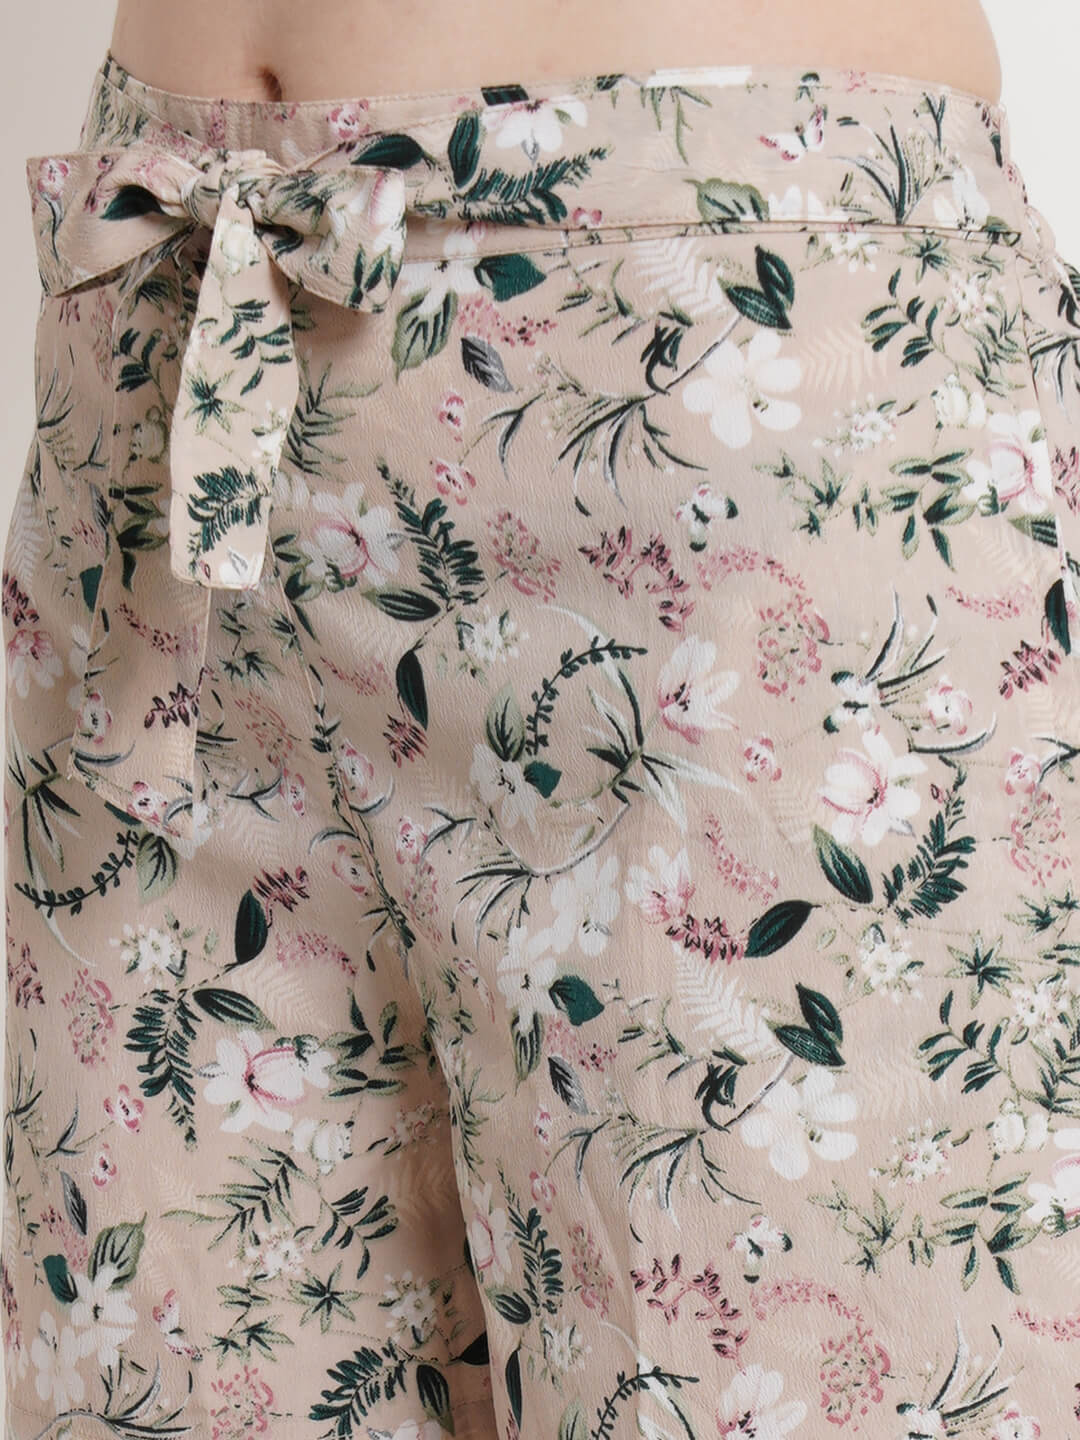 Popwings Women Beige Floral Printed Regular Fit Shorts For Women